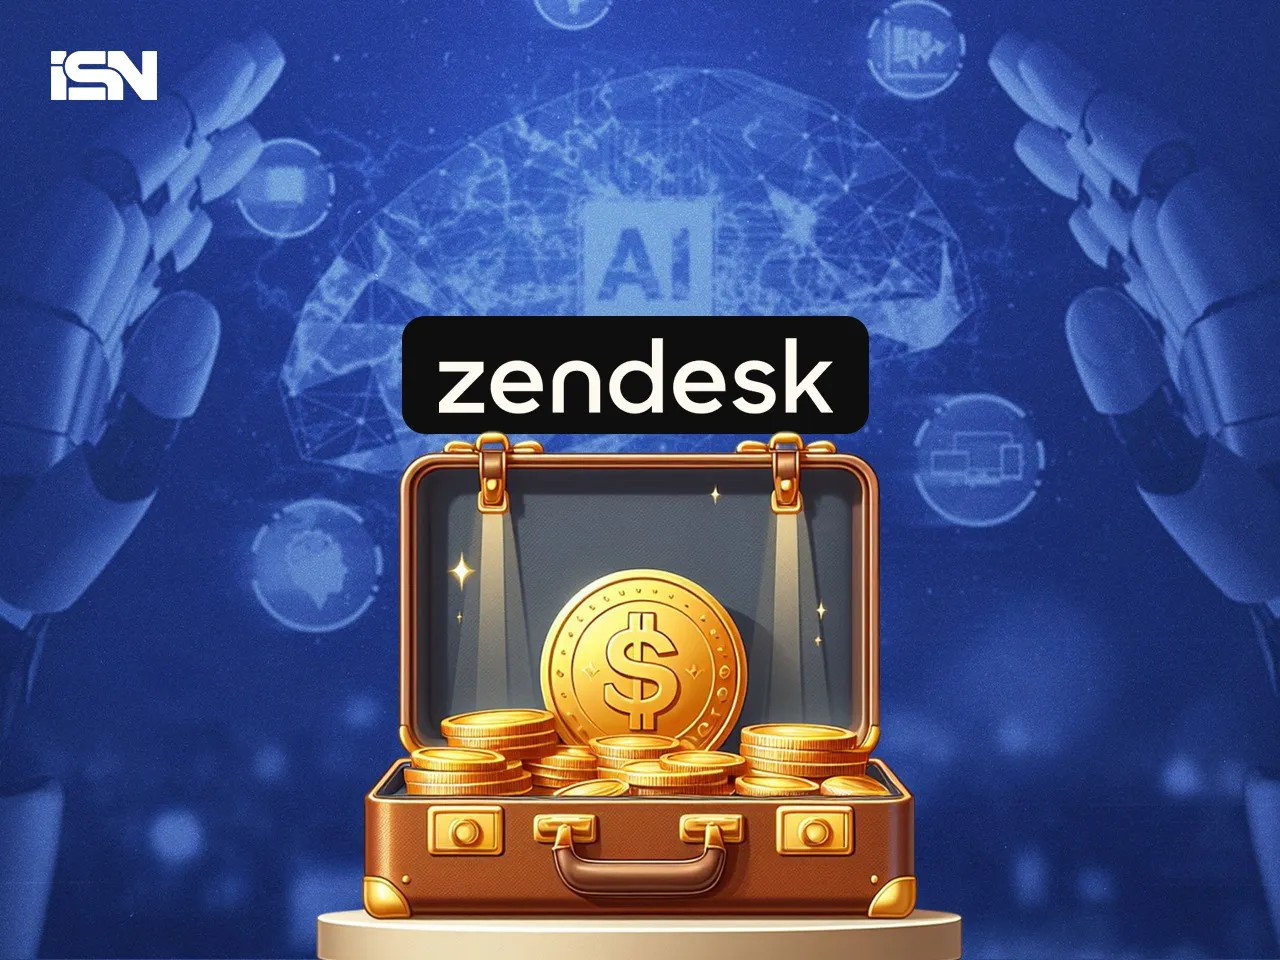 Zendesk launches venture fund